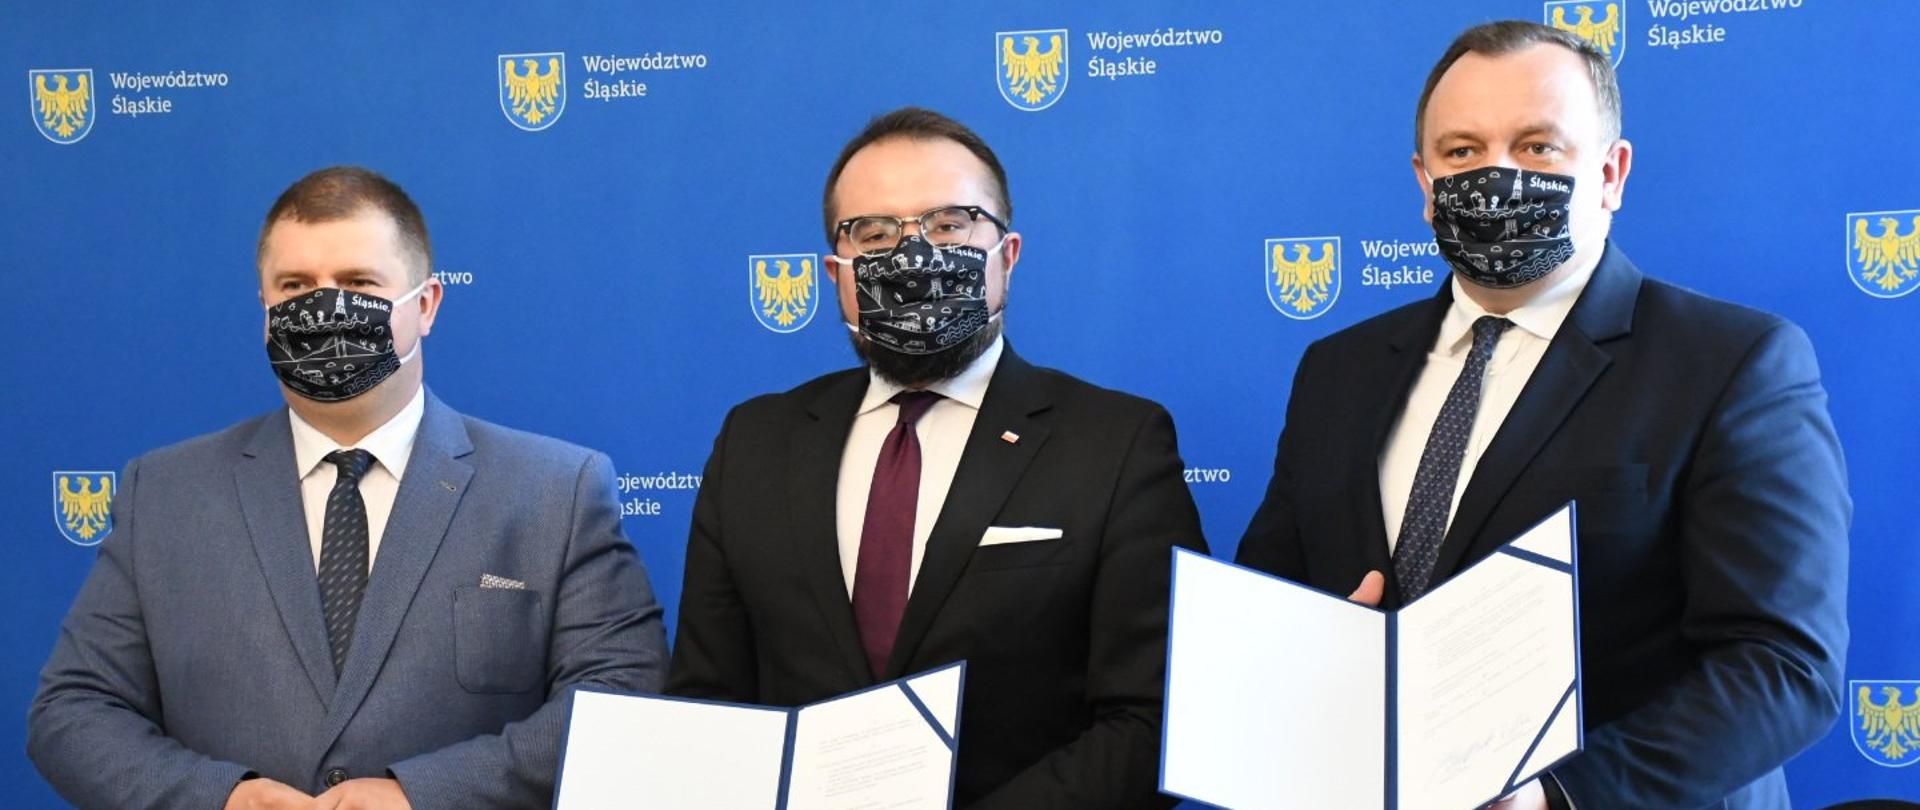 Deputy Foreign Minister Paweł Jabłoński and Marshal of the Śląskie Voivodeship Jakub Chełstowski signed an agreement in Katowice